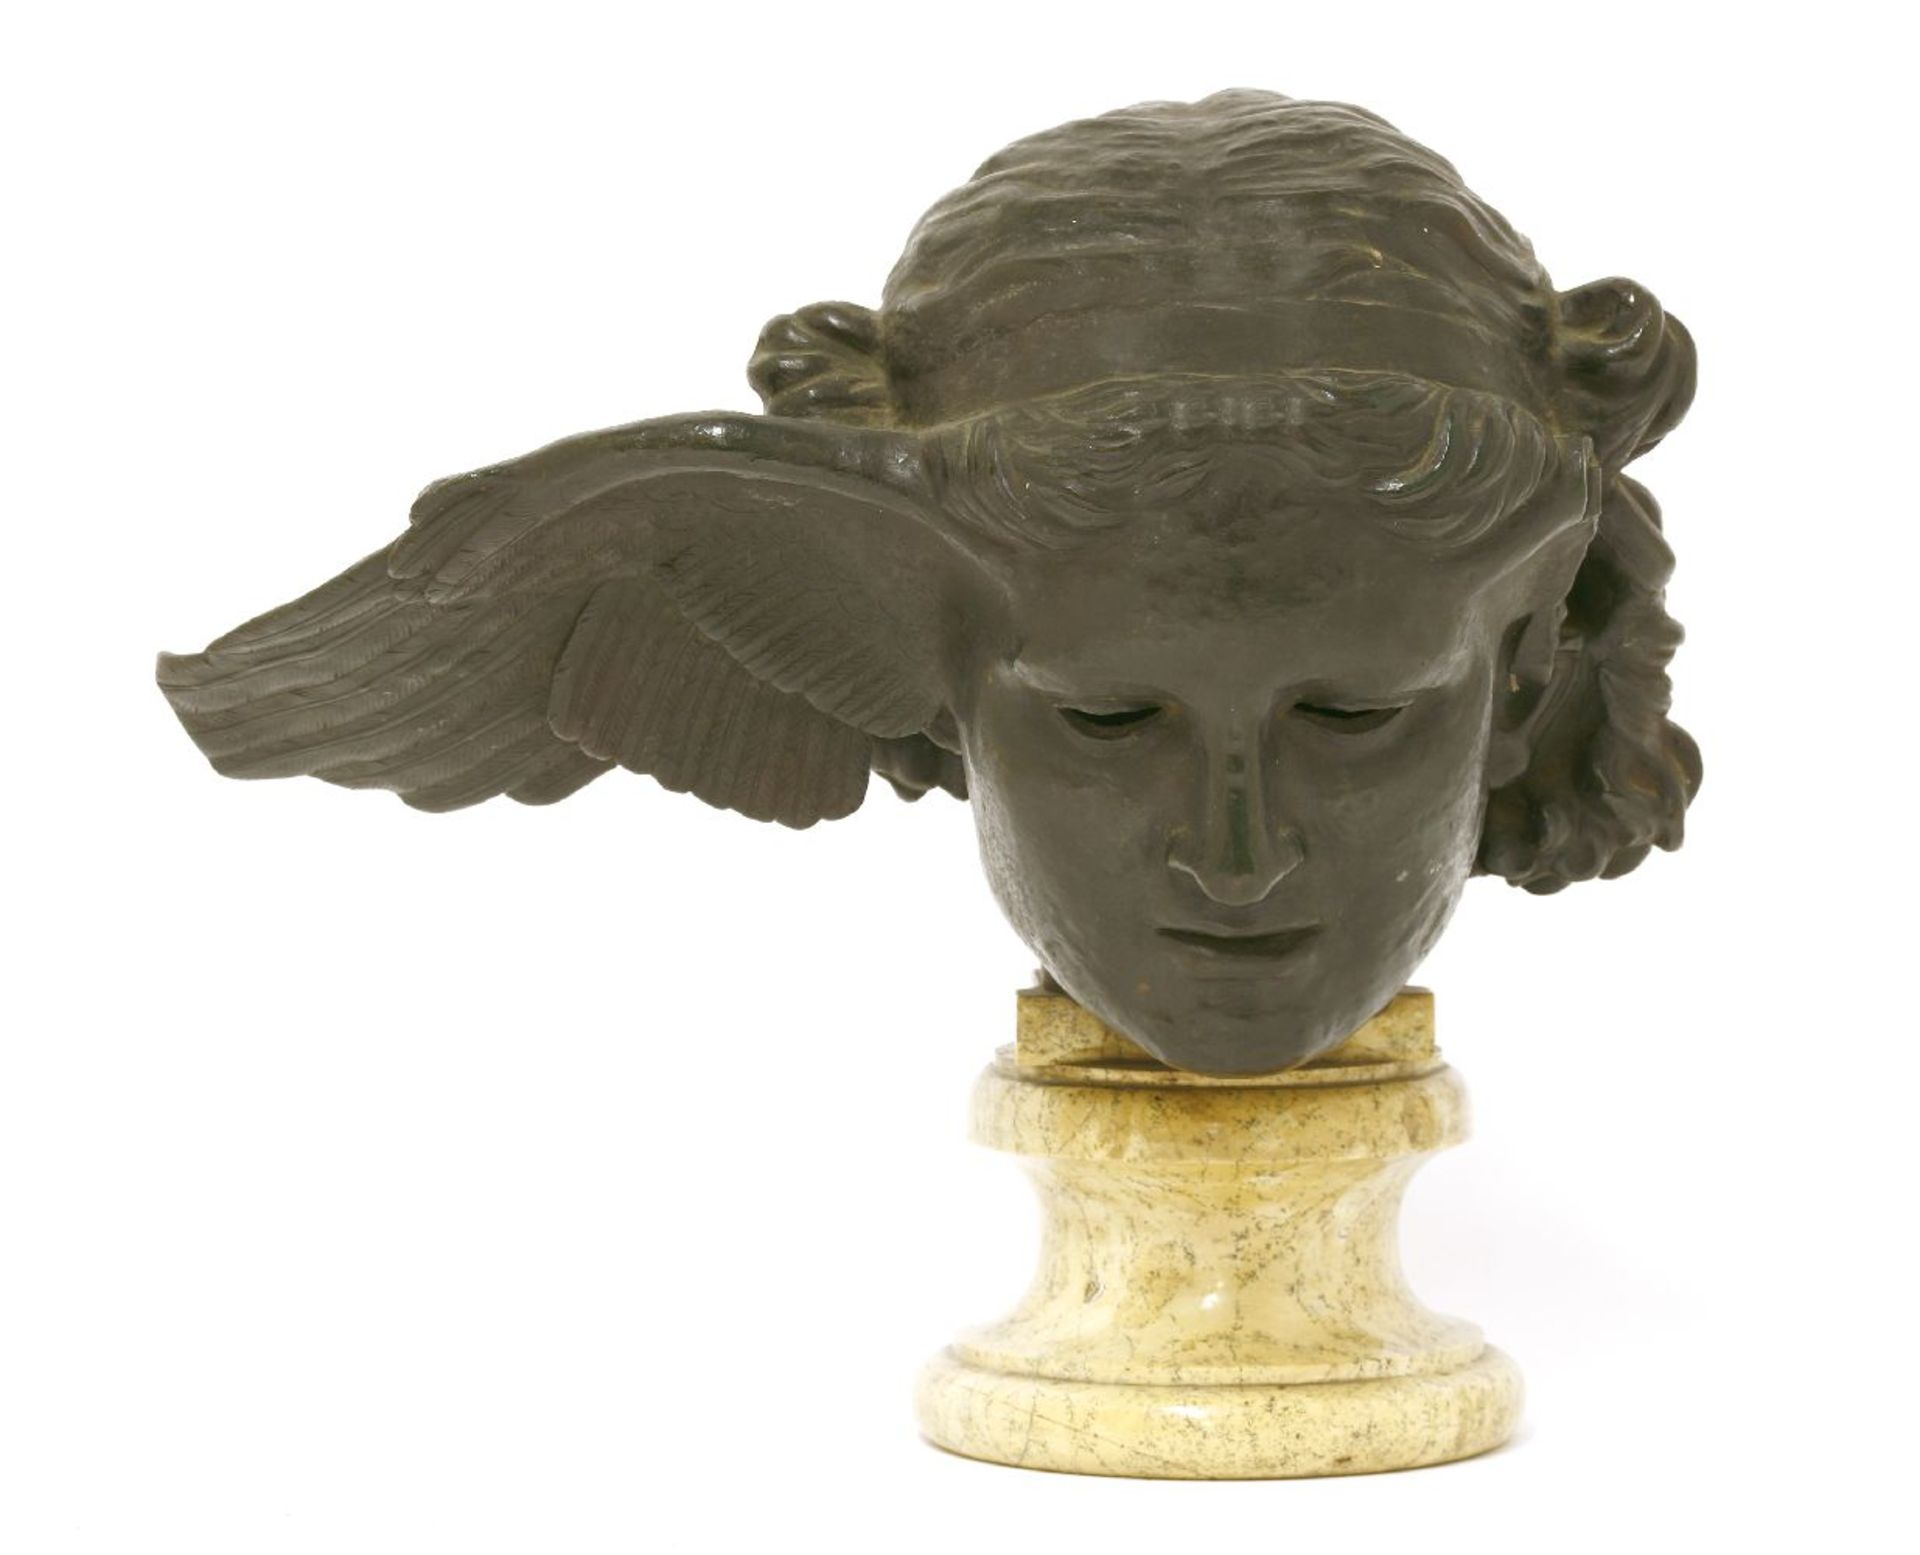 J Chiurazzi & Fils - S de Angelis & Fils of Naples,late 19th century, a bronze head of Hypnos God of